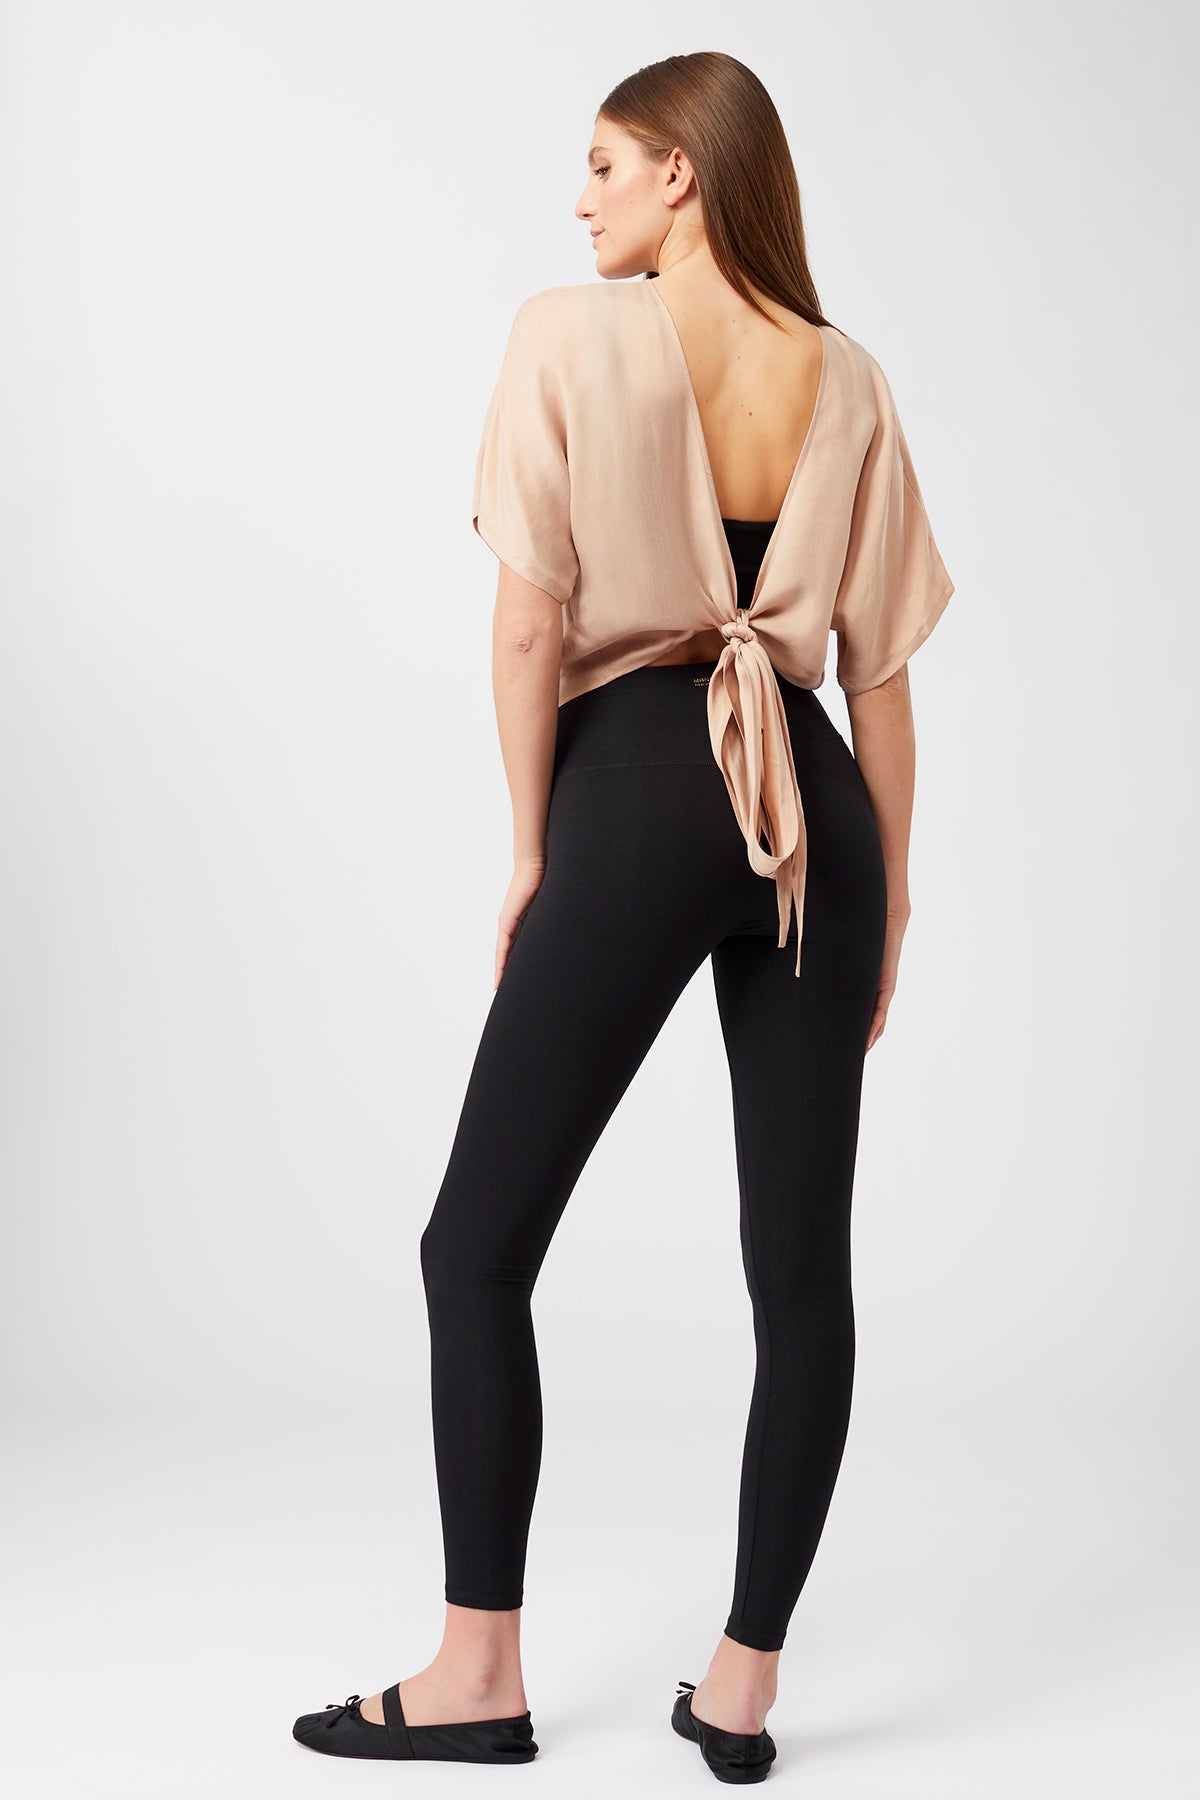 Mandala Yoga Jacke Beige Outfit Rückseite - Wrap Top Oversize